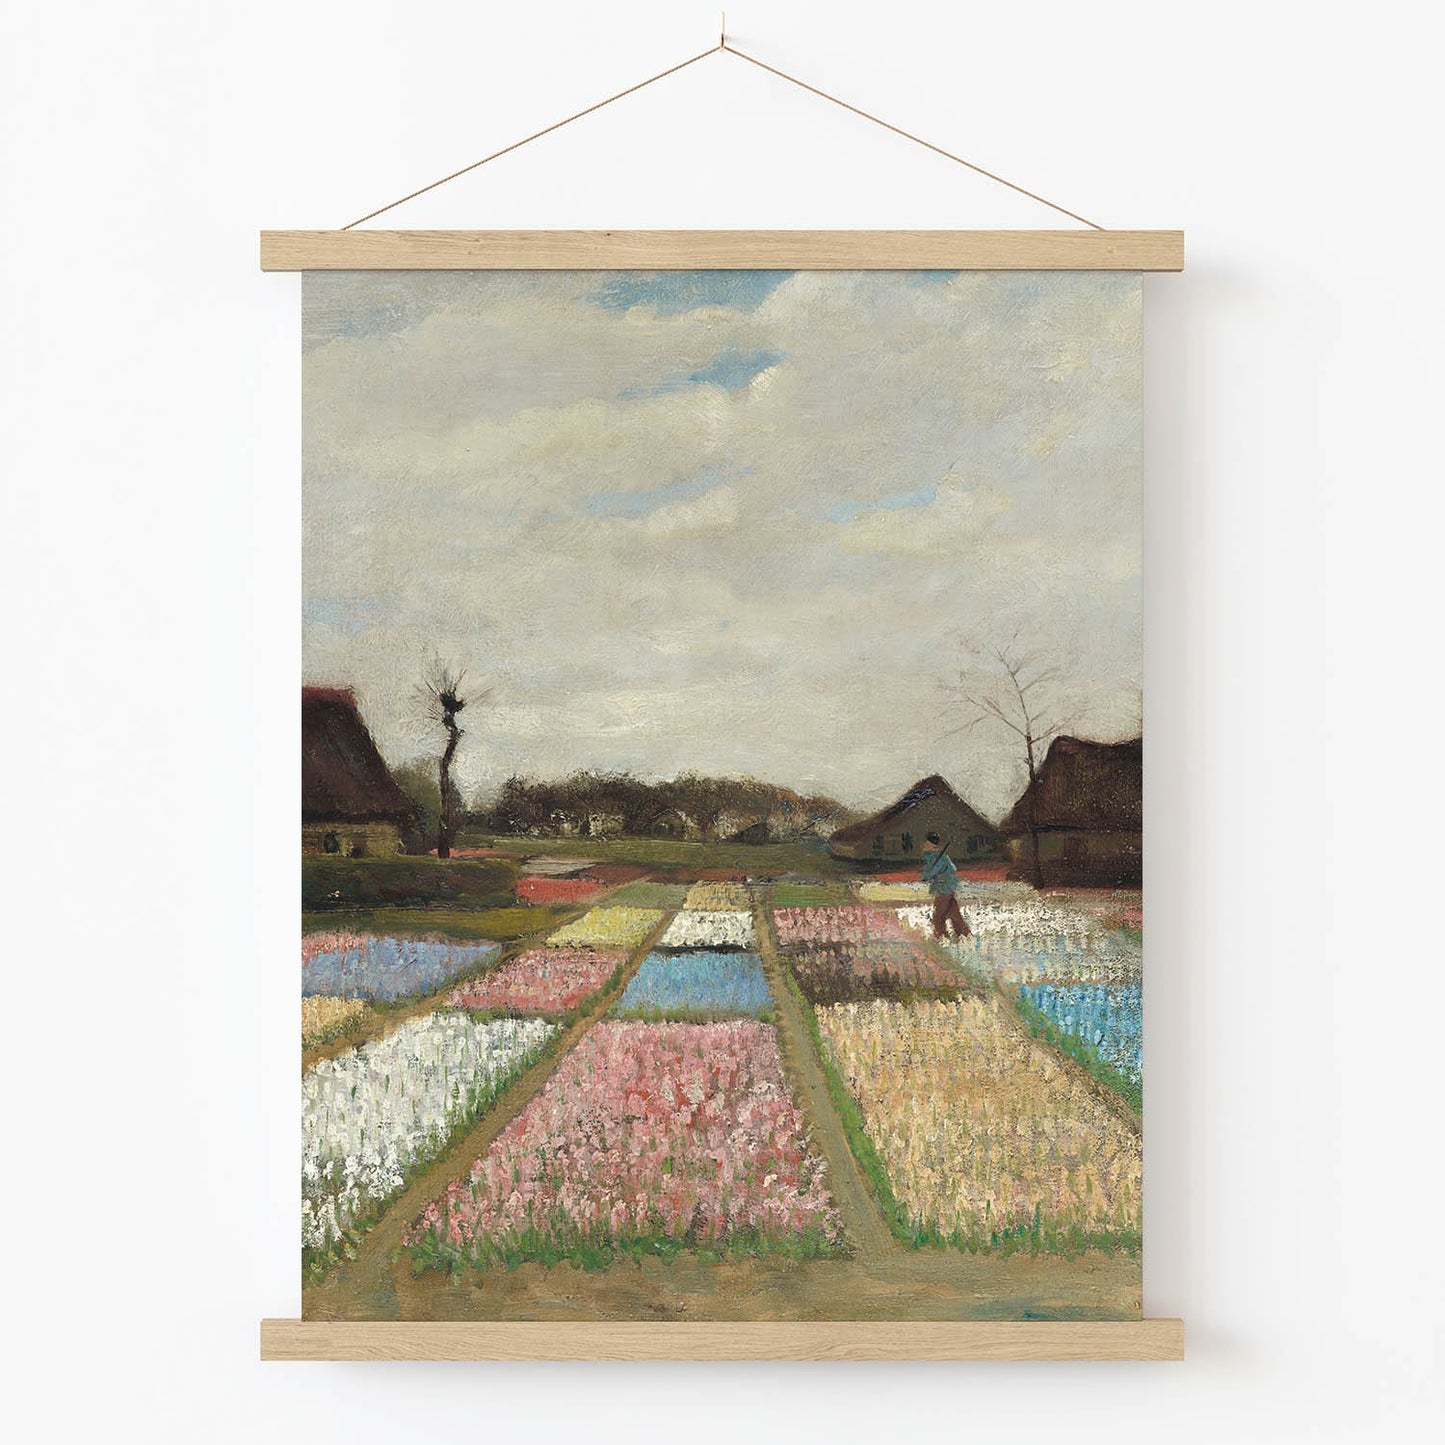 Antique Field of Flowers Art Print in Wood Hanger Frame on Wall